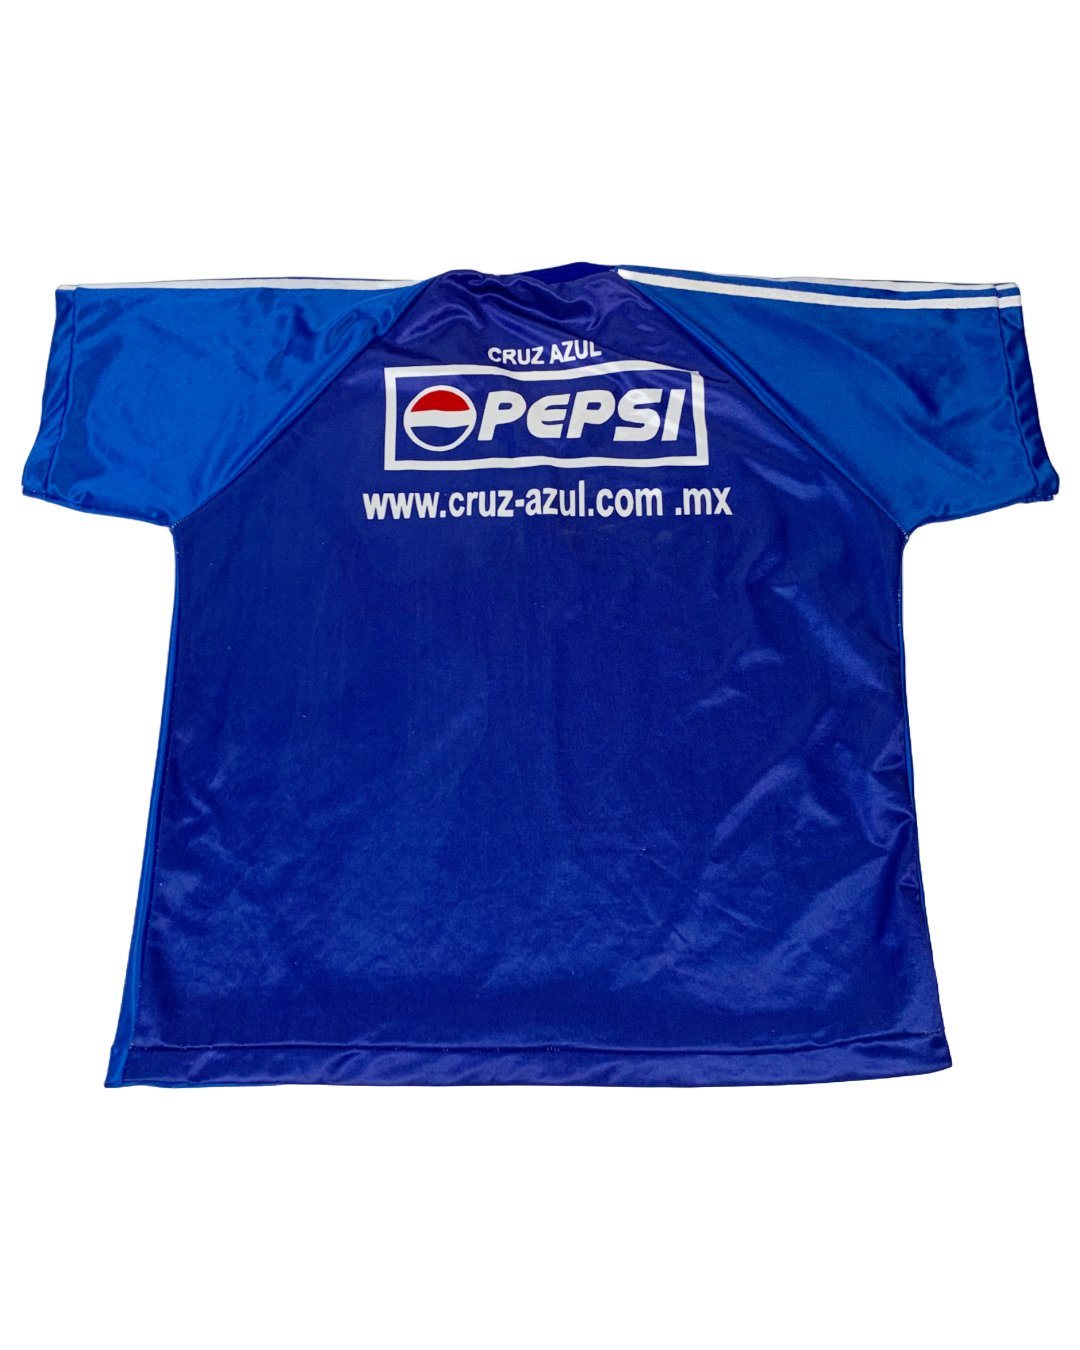 Cruz Azul 2001 Vintage Jersey - XL